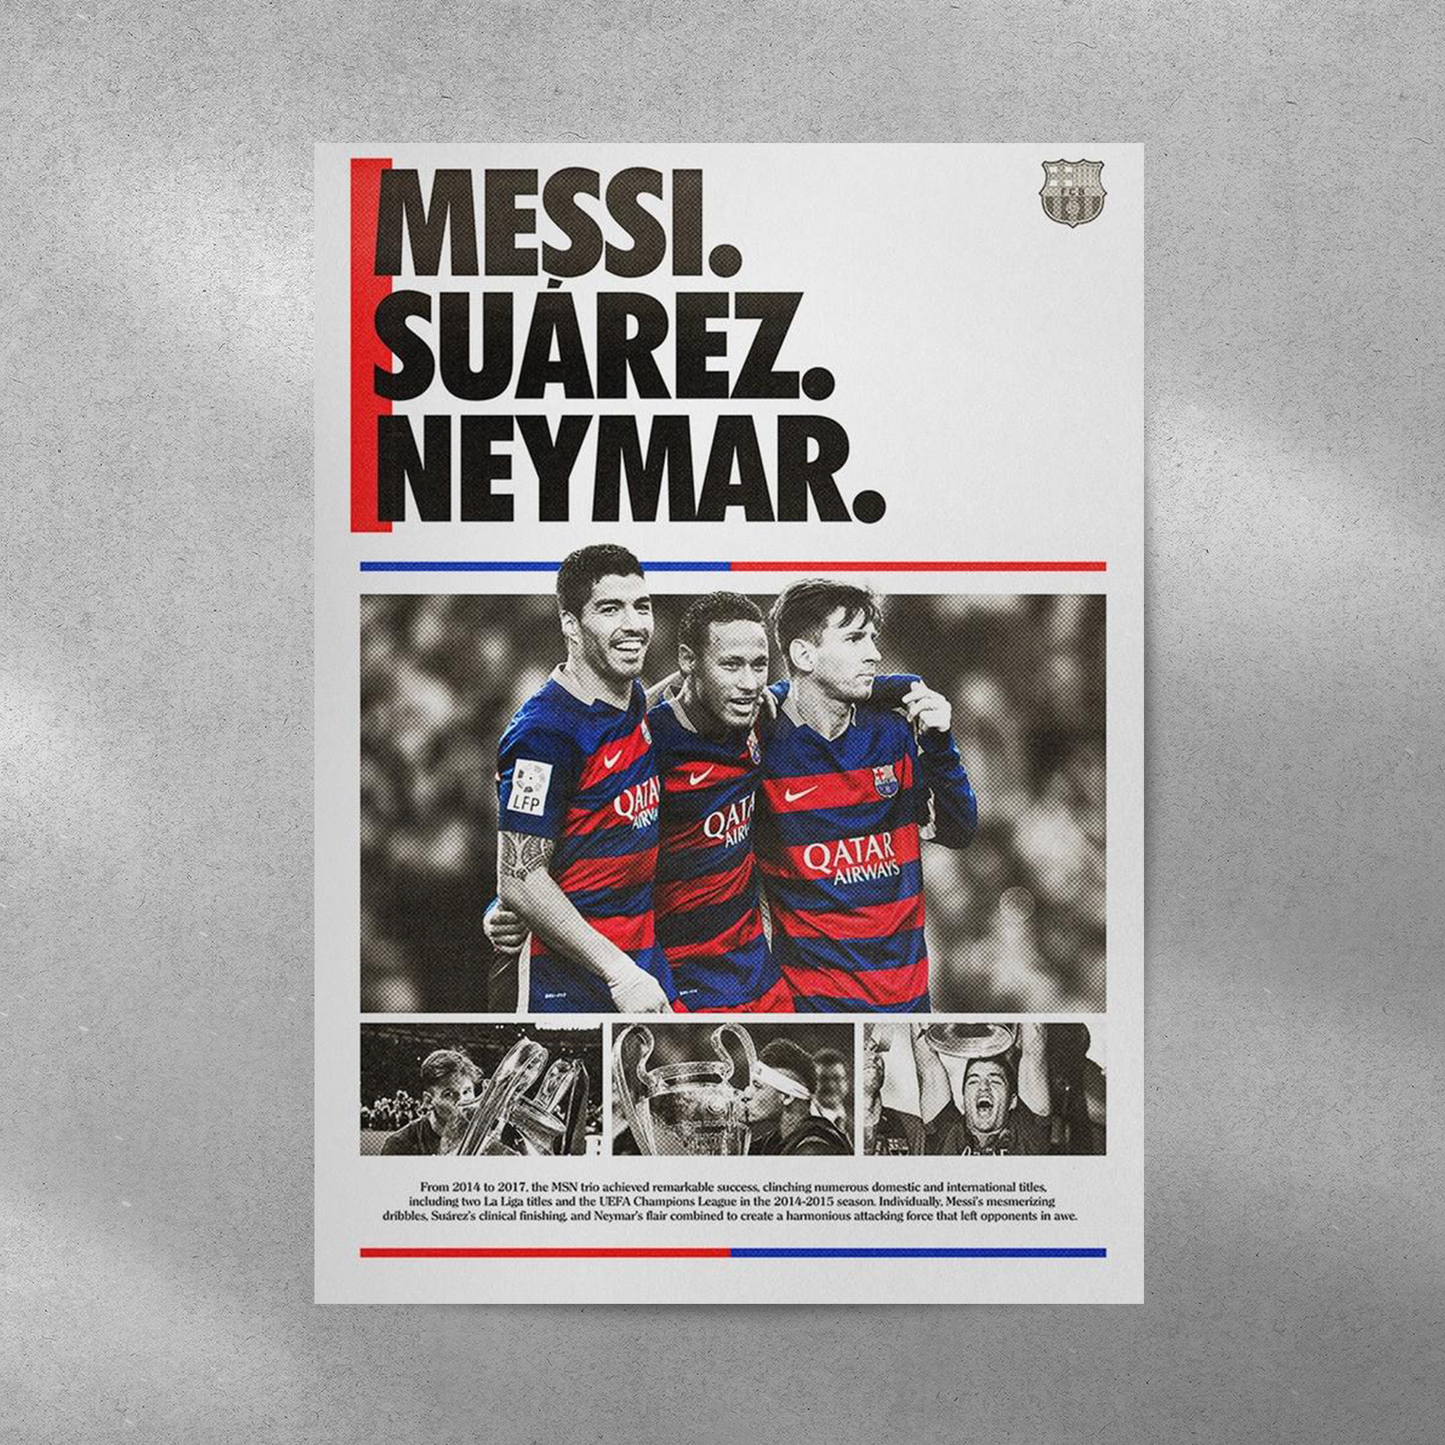 MSN: Messi, Suarez, Neymar